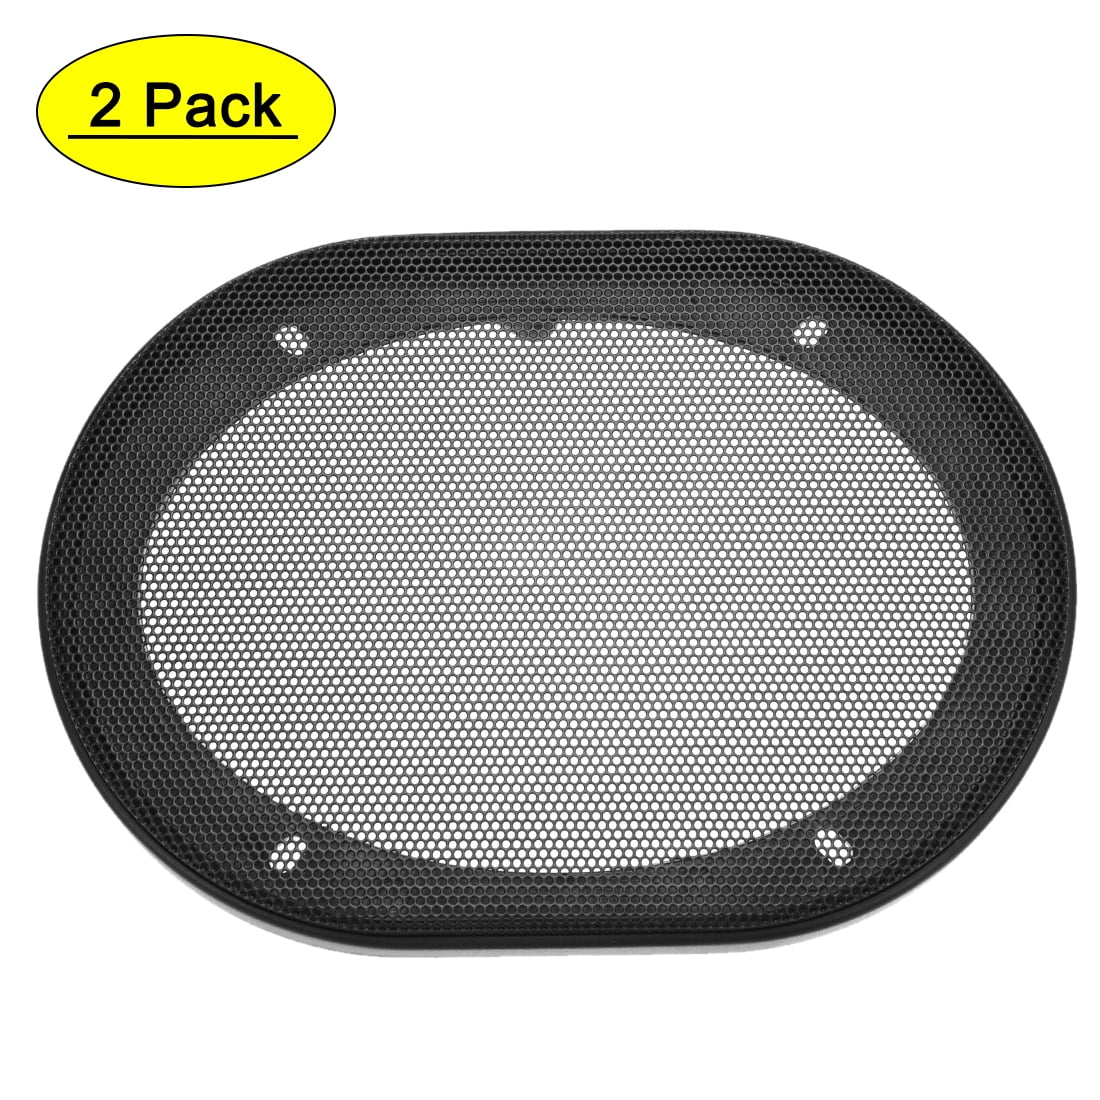 2pcs 5"x7" inch Audio Speaker Cover Decorative Circle Metal Mesh Grille #Beige 